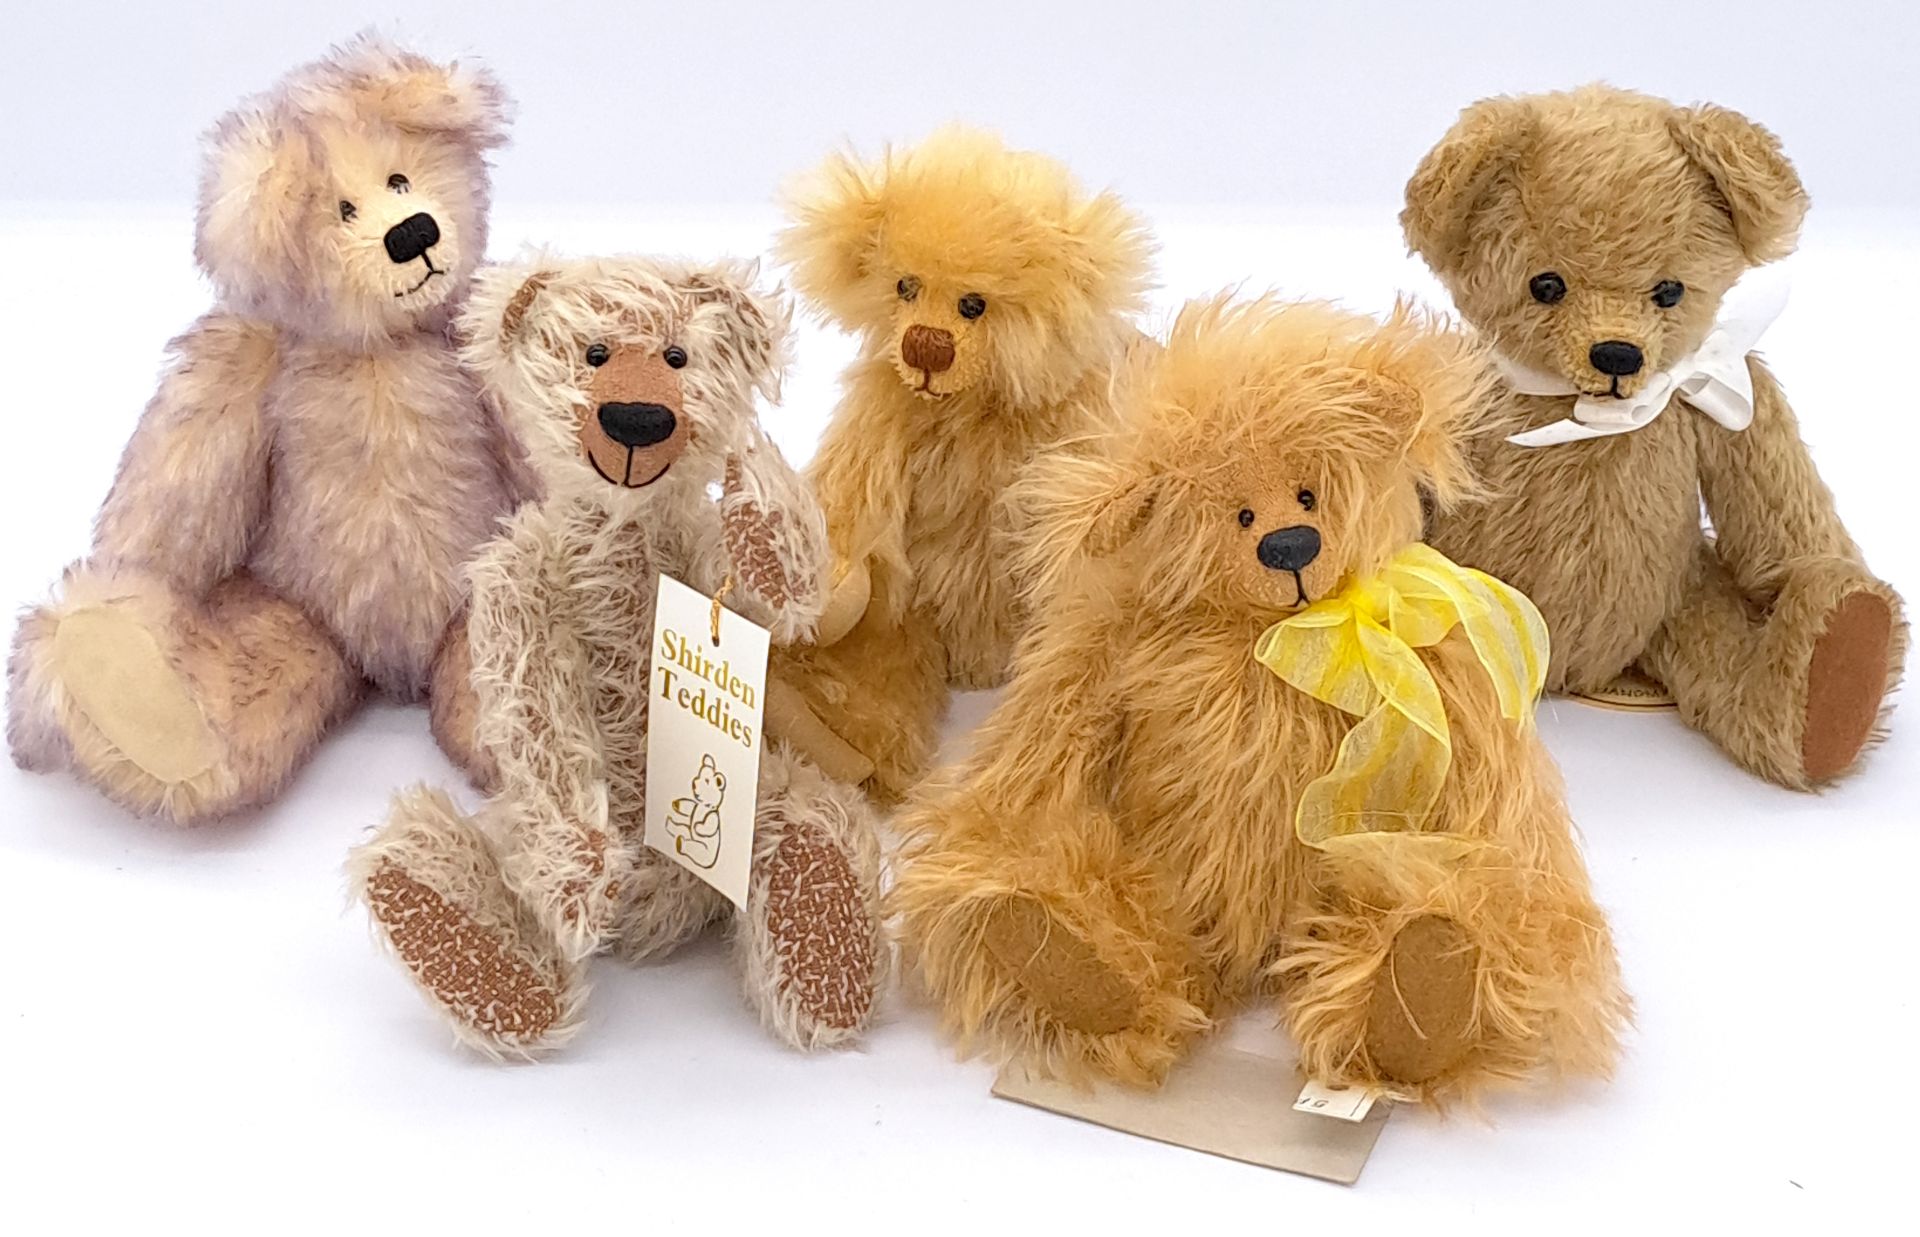 Assortment of small artist teddy bears, including Robin Rive